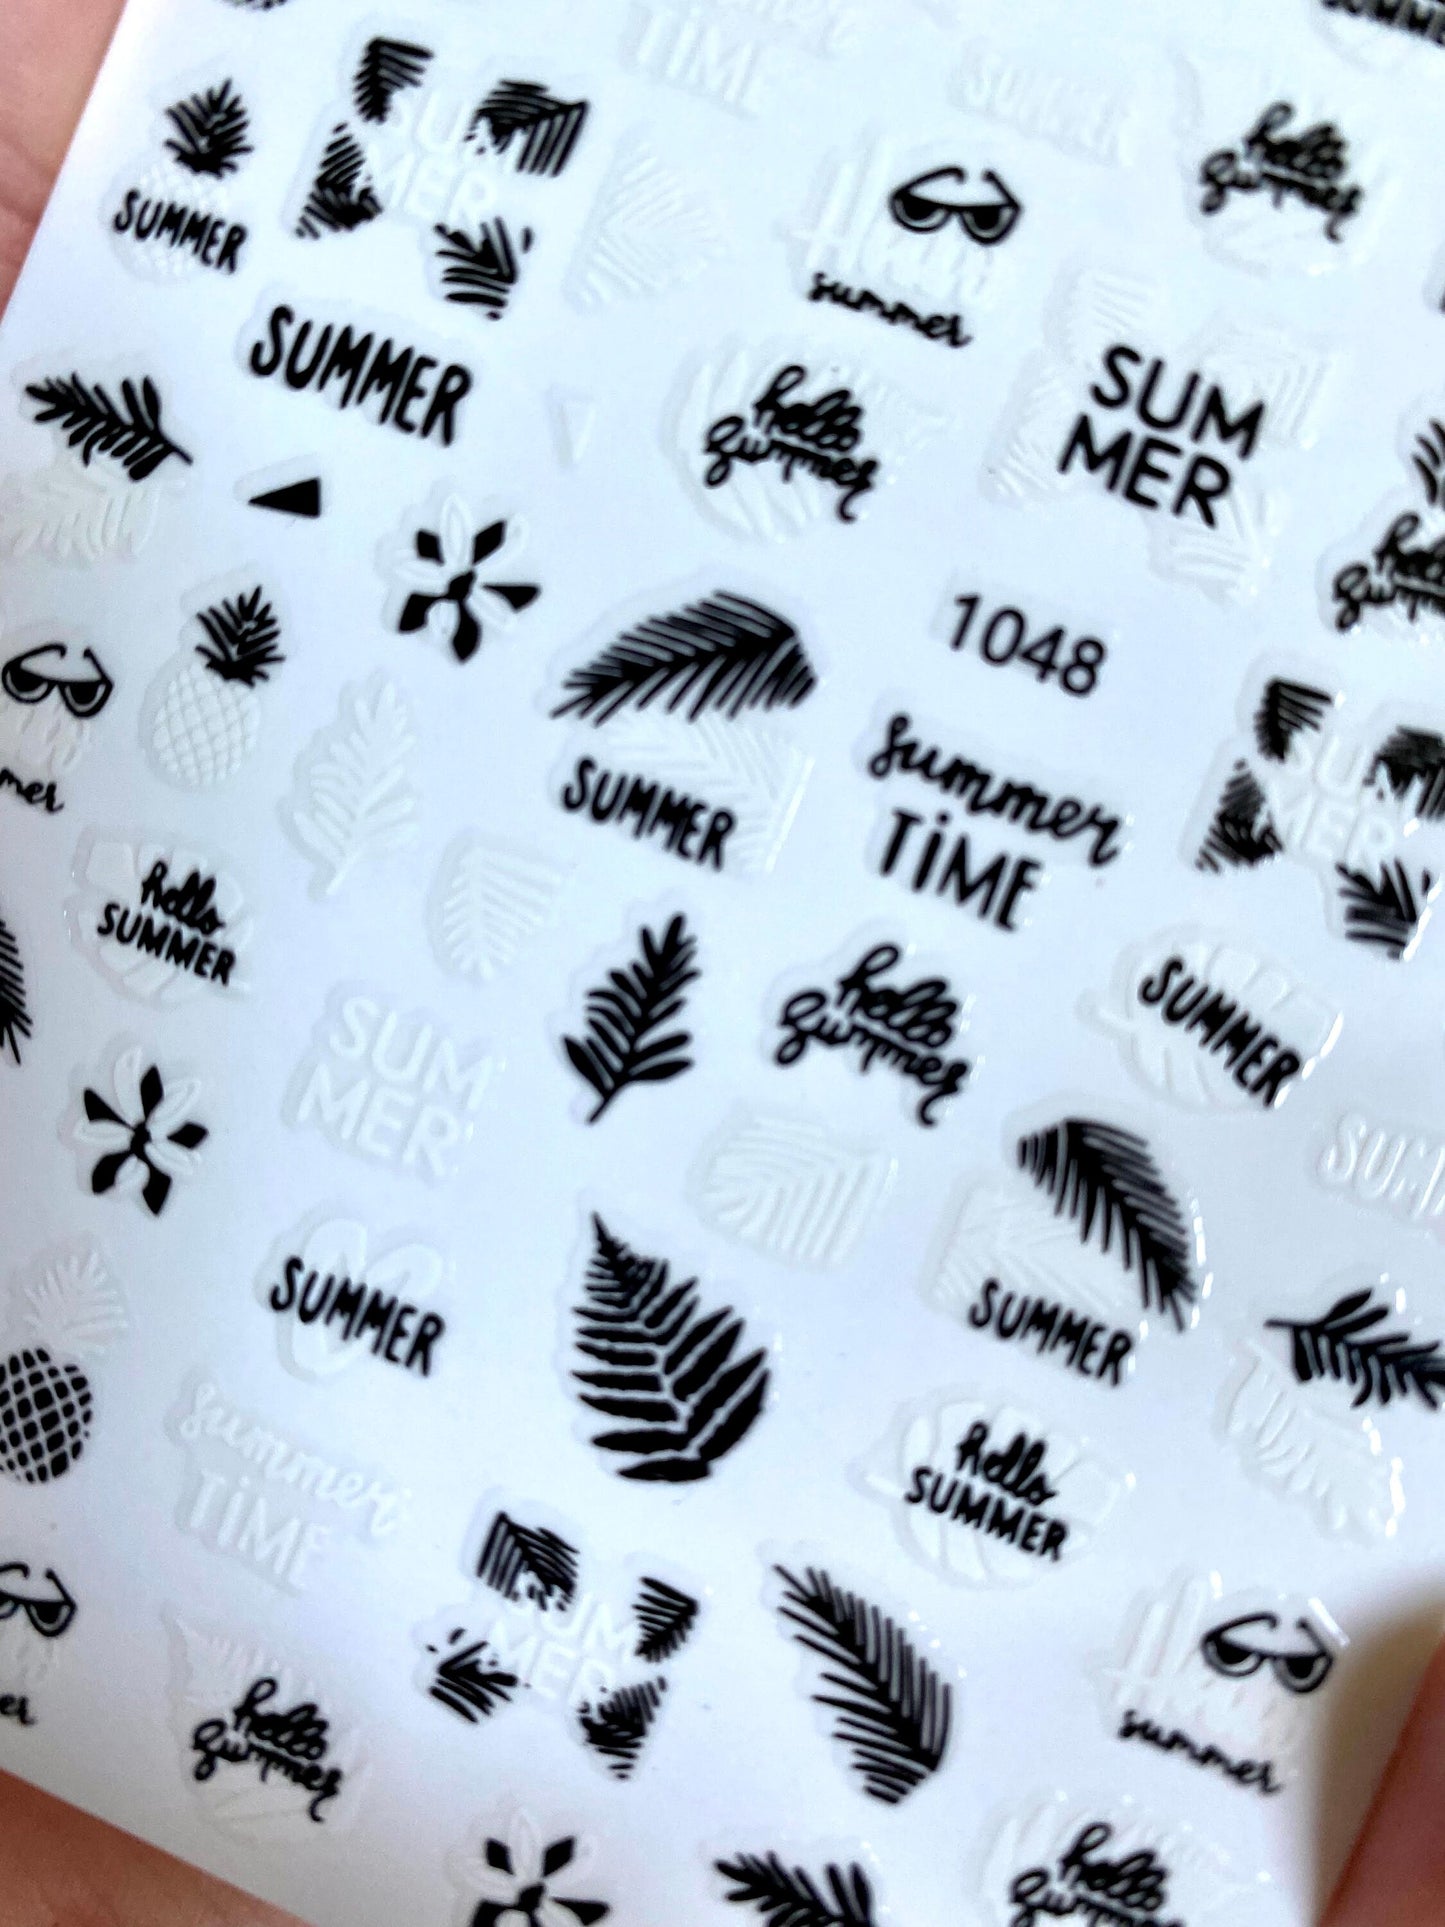 Summer Nail Art Stickers, Decals, Transfers, Wraps - Beach Vacation, Summer, Palm Trees and Flip Flops, Sunglasses Sticker, Nail Art - manicurenailpolish